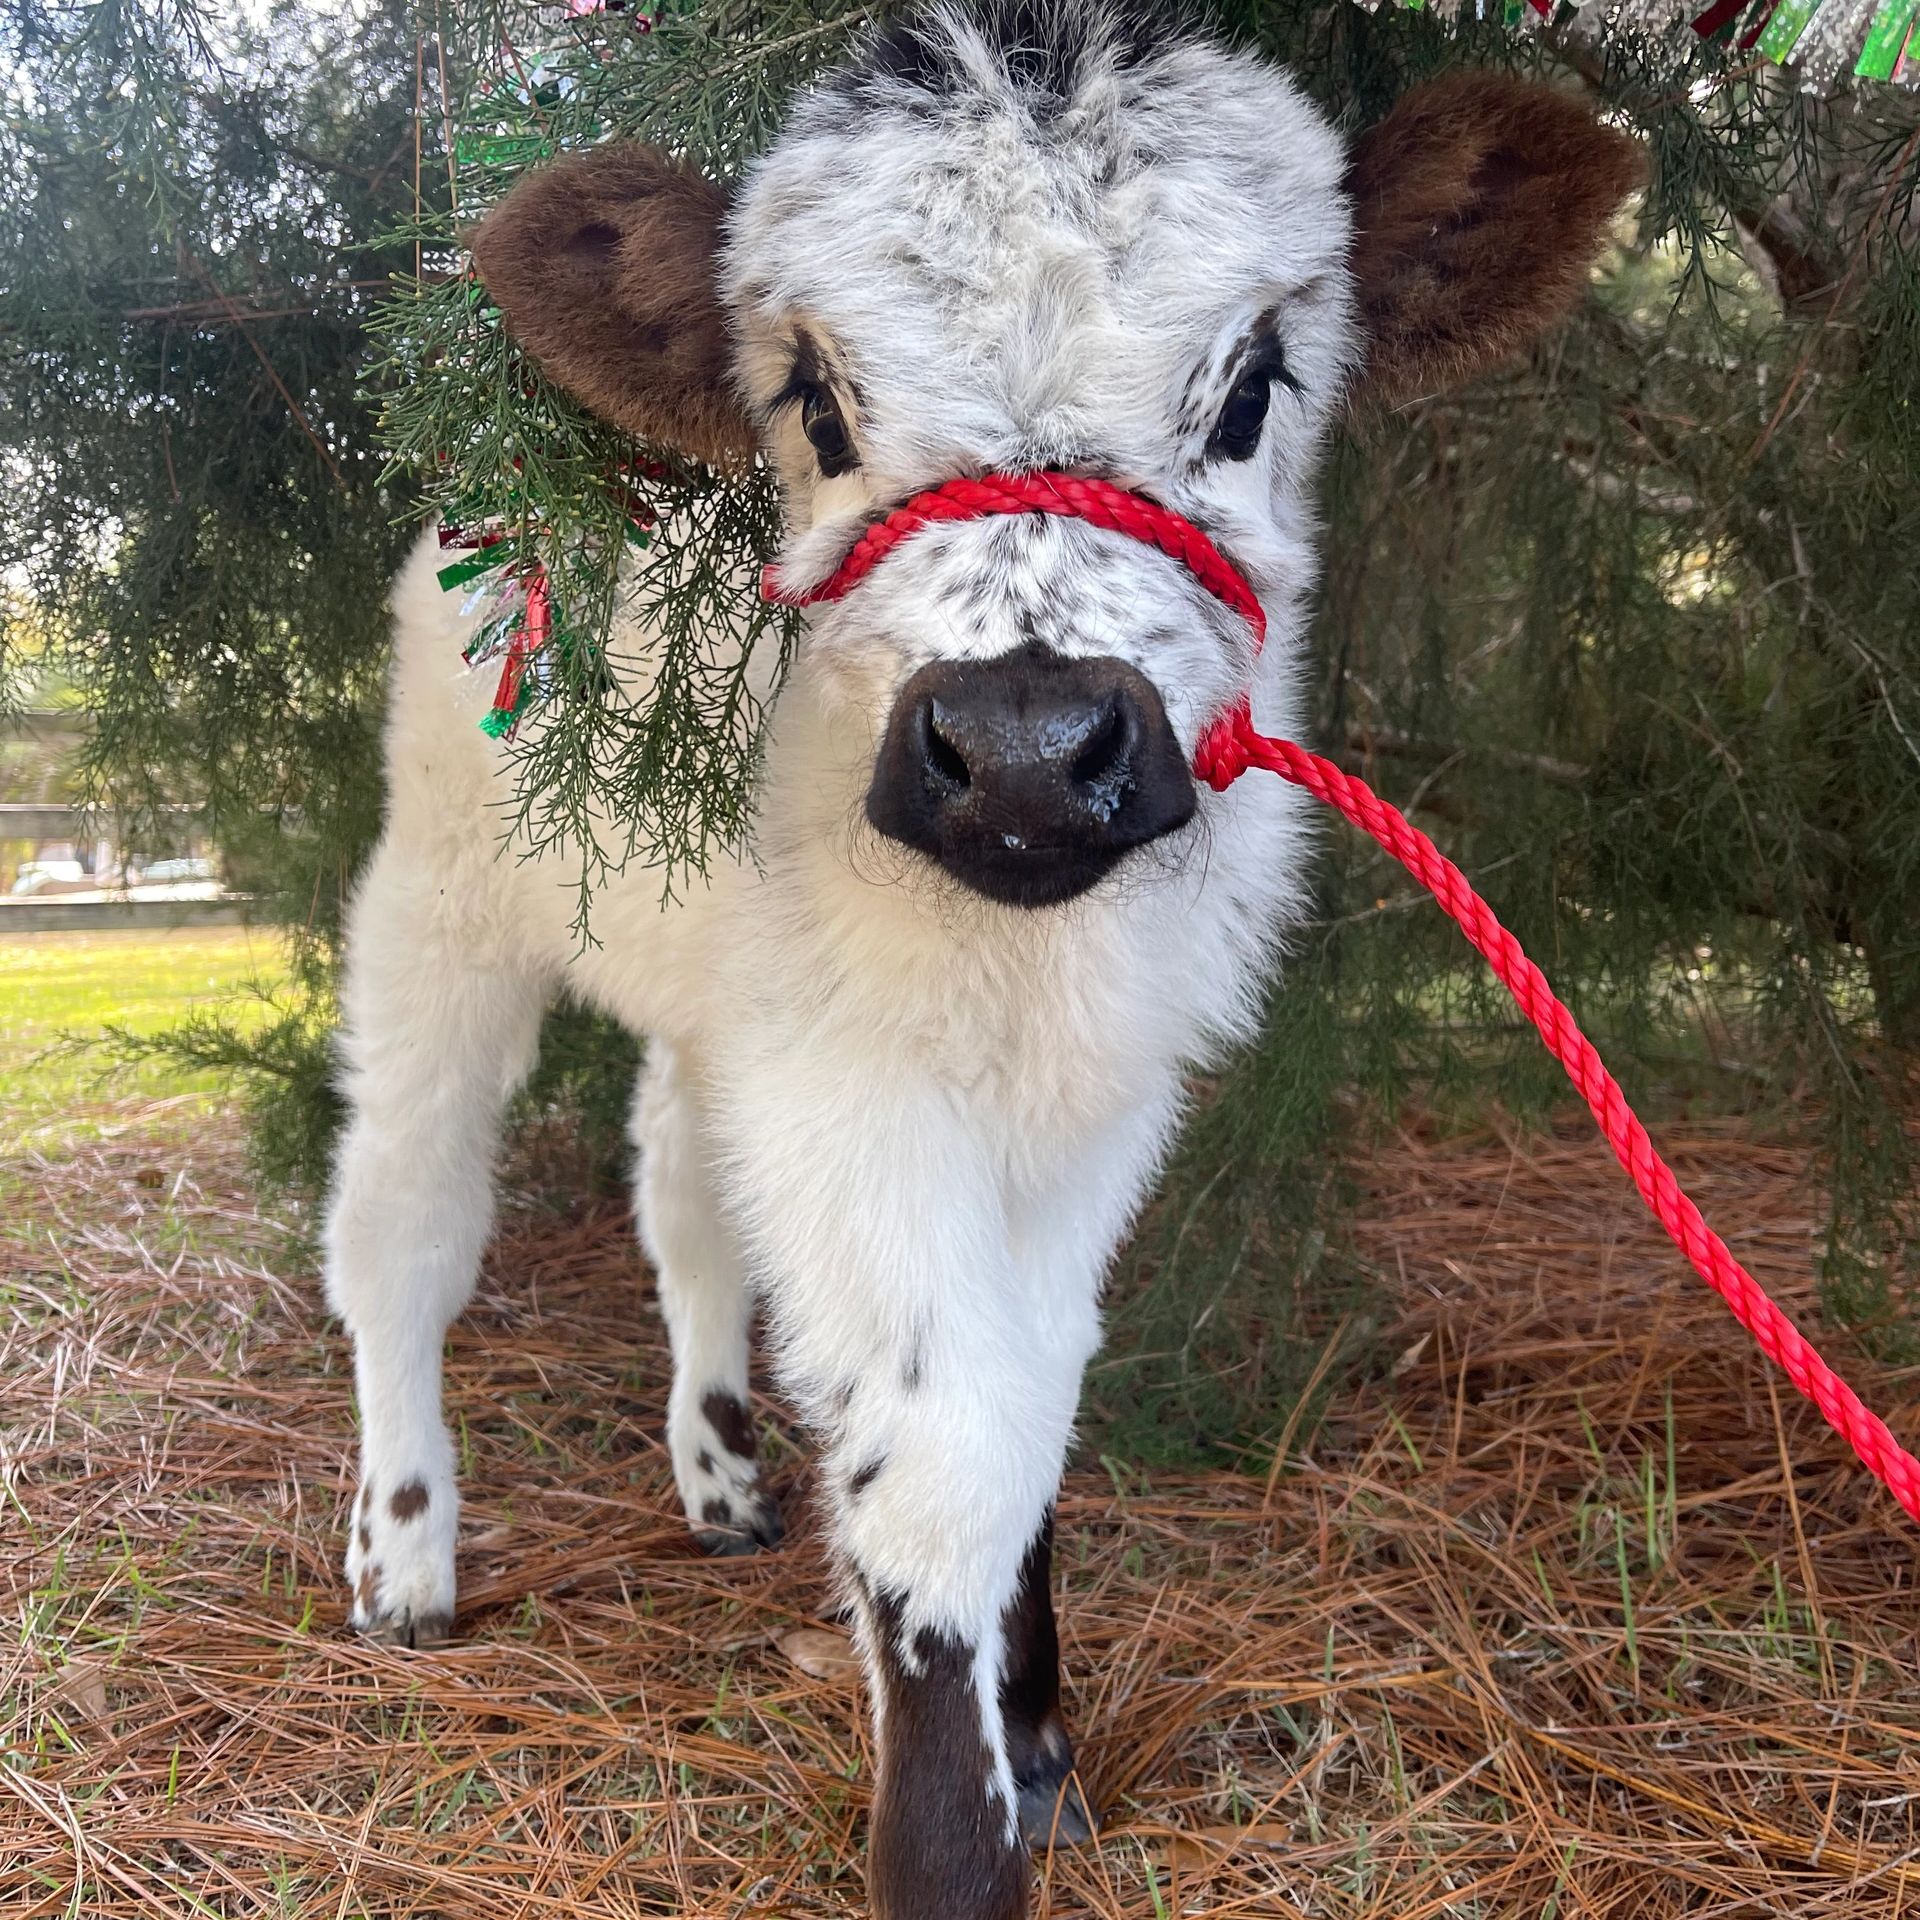 Available Mini Cows  Live Oak Mini Ranch